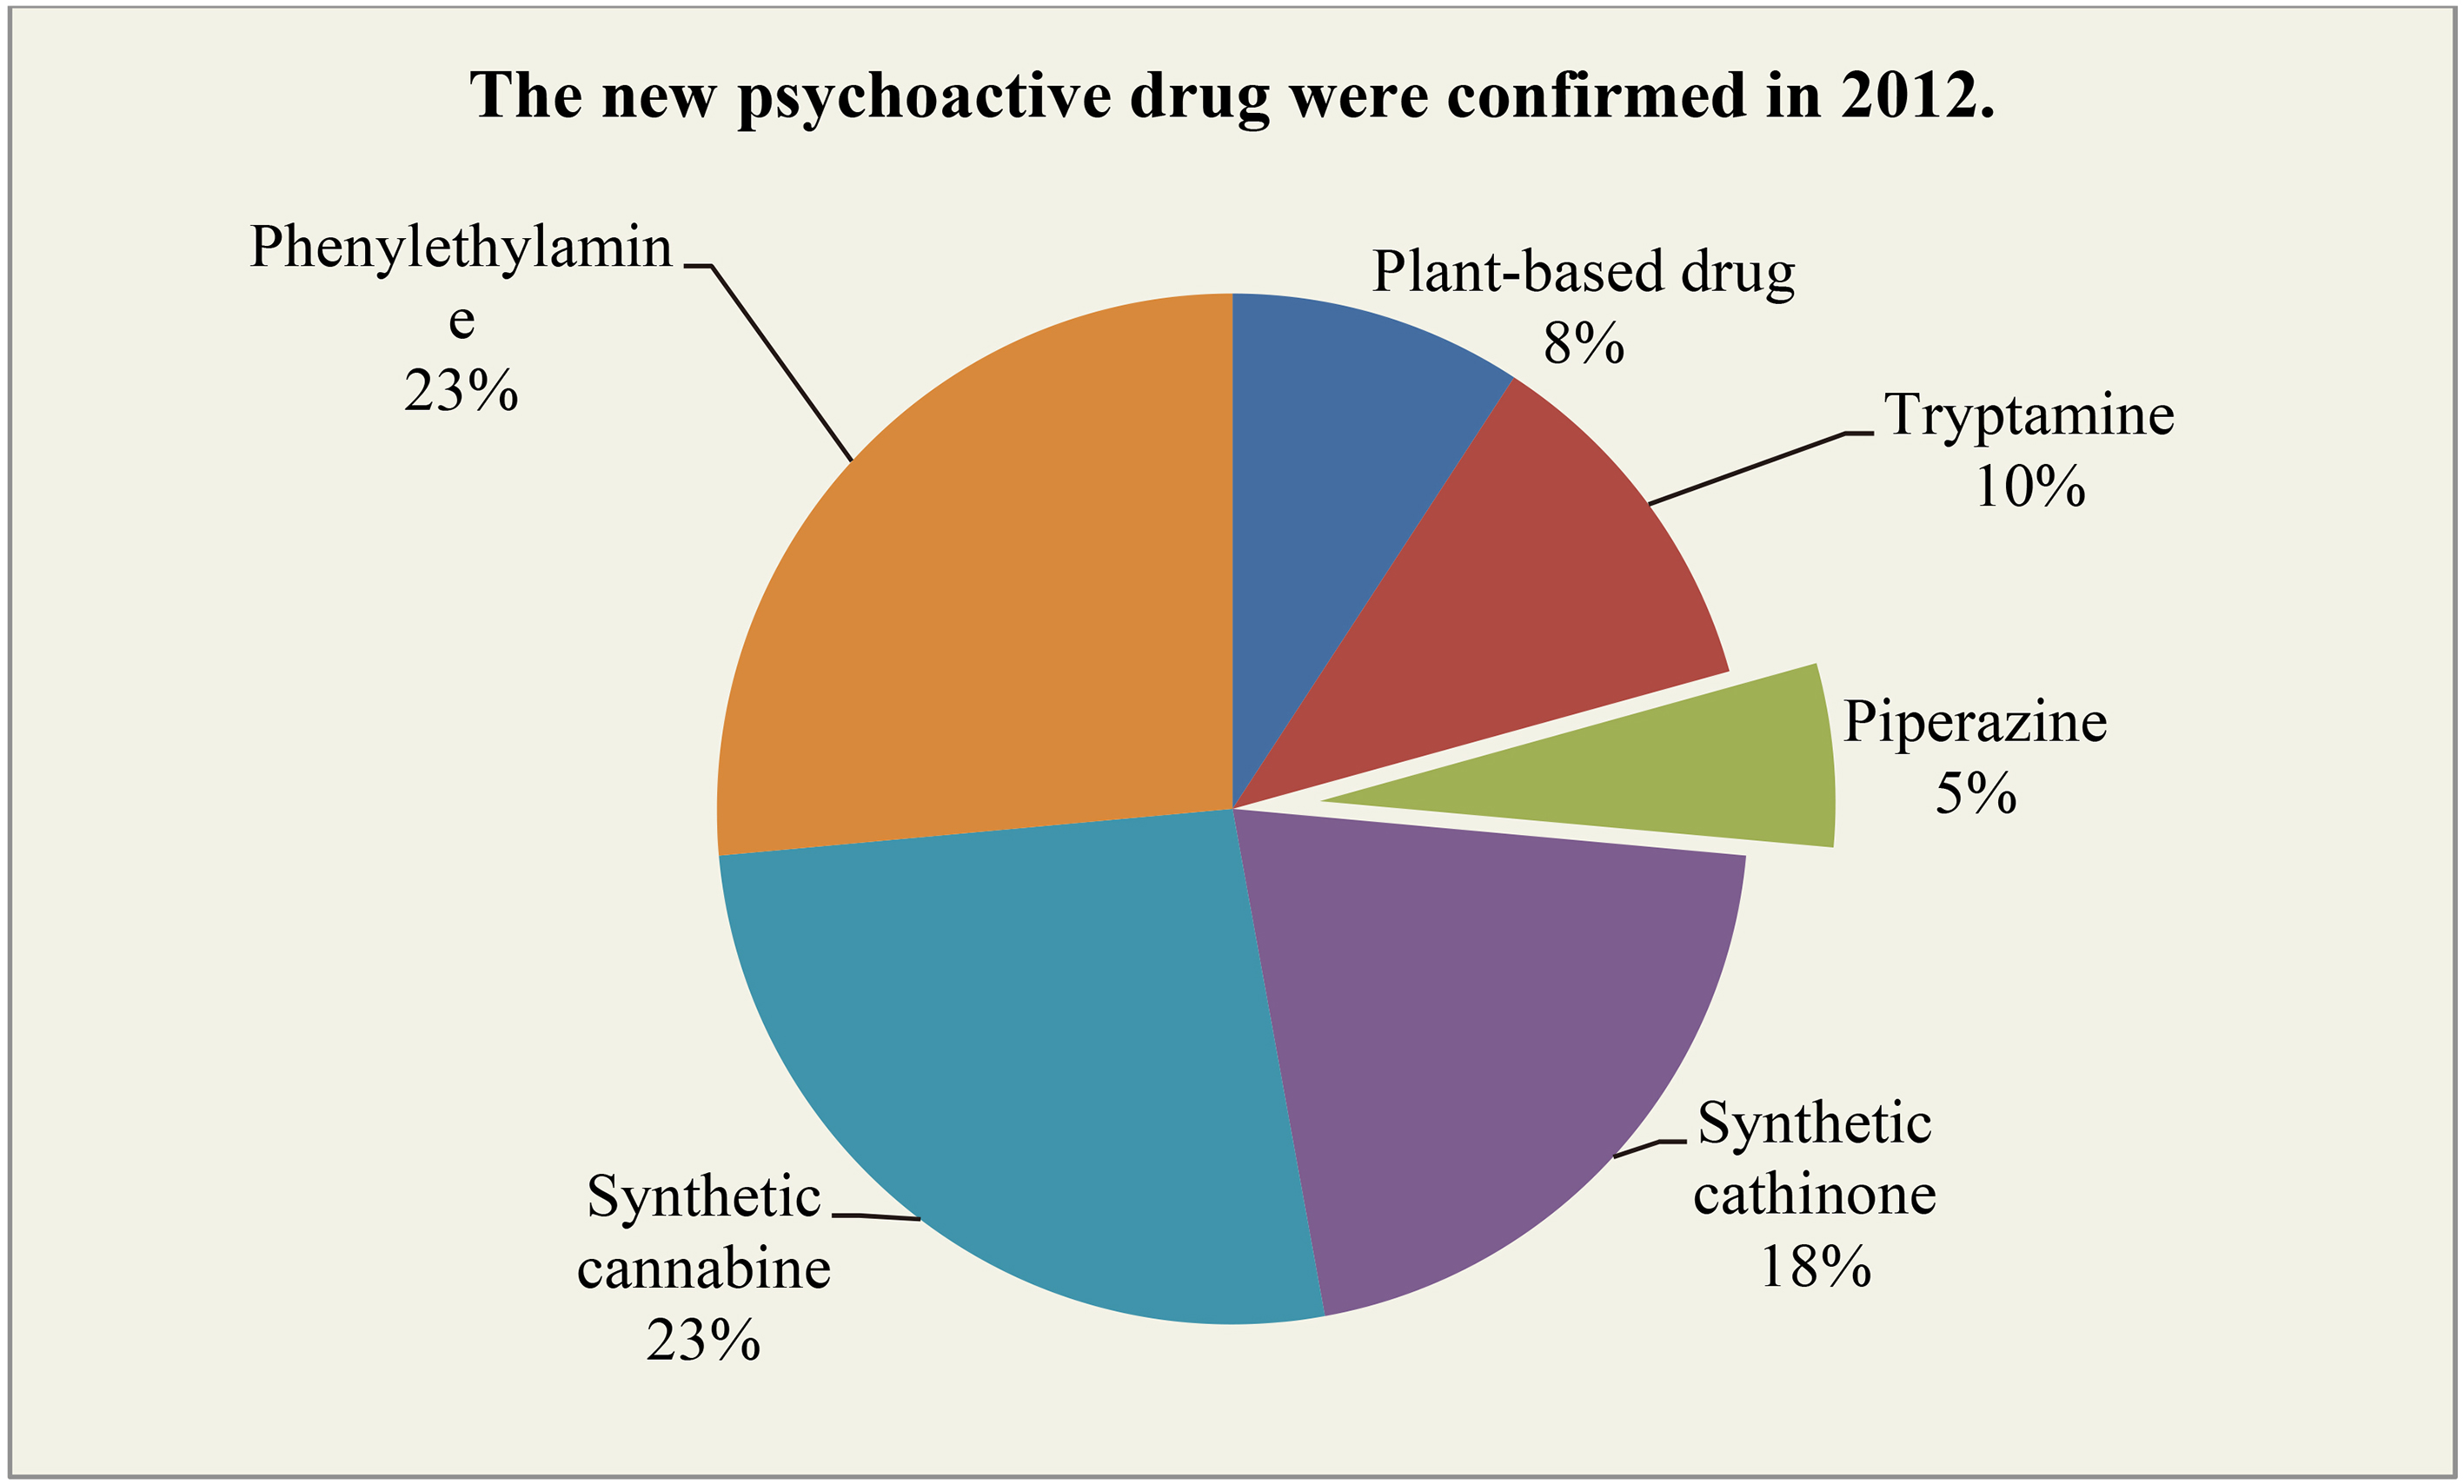 The new psychoactive drug is confirmed in 2012 [24].